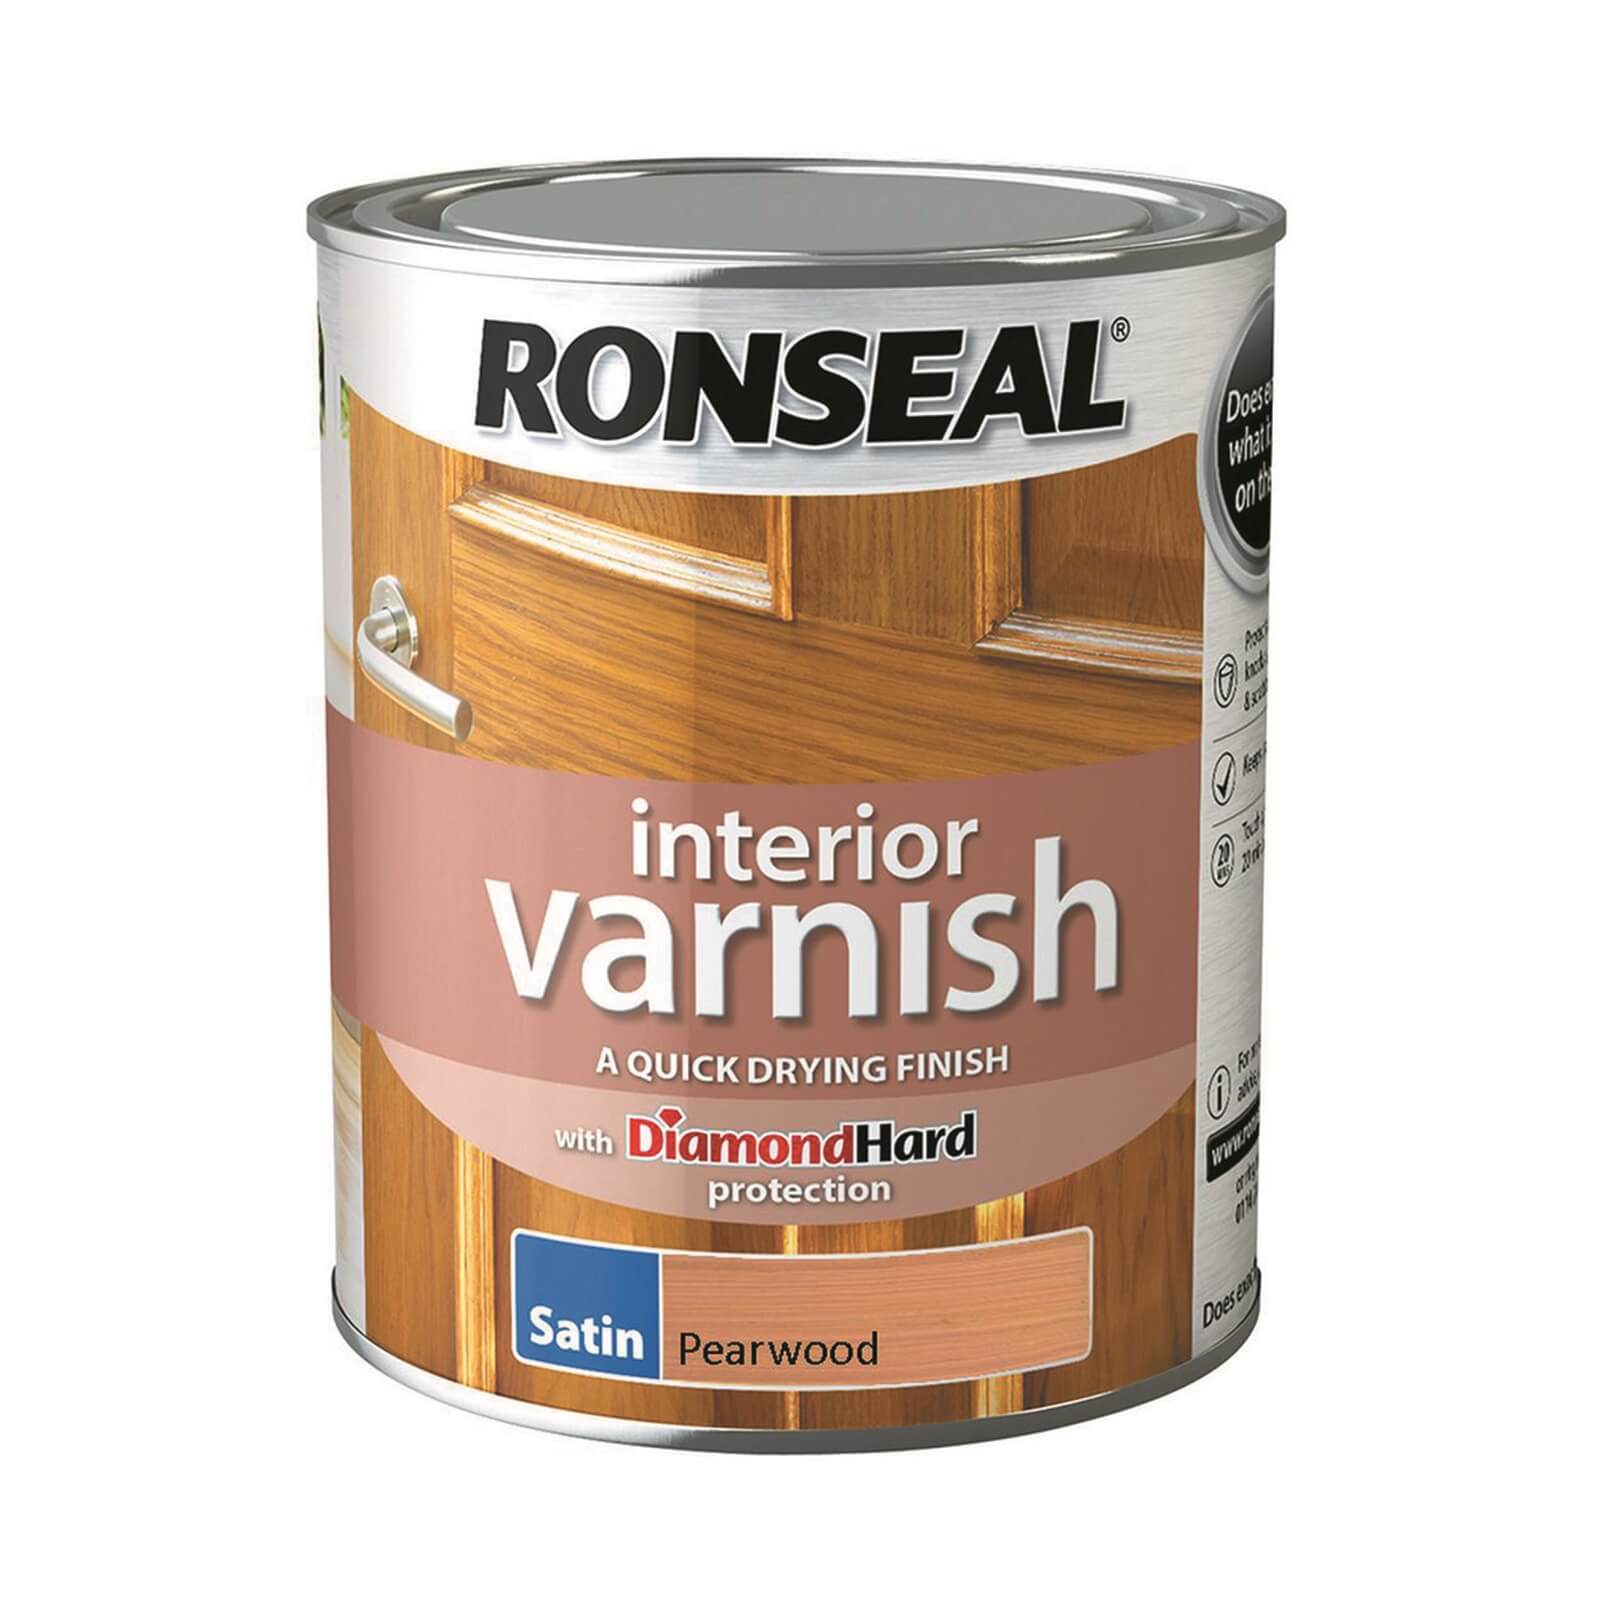 Ronseal Interior Varnish Satin Pearwood - 750ml